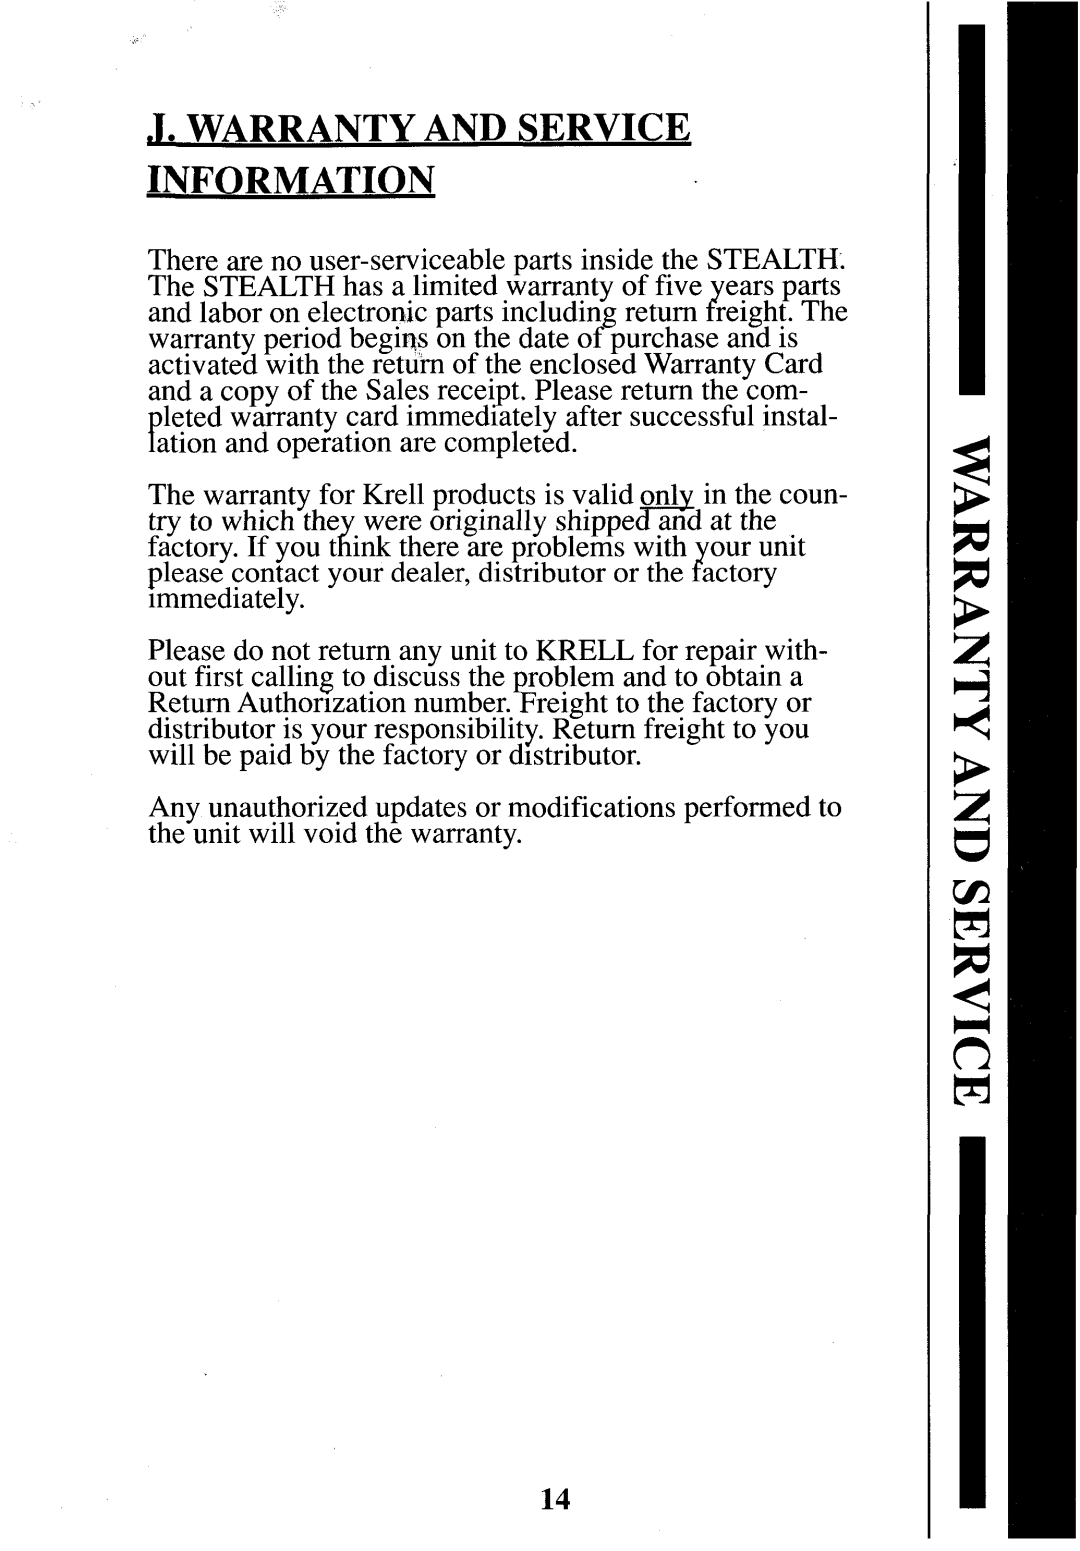 Krell Industries Stereo Preamplifie manual ¯1. WARRANTYAND SERVICE INFORMATION 